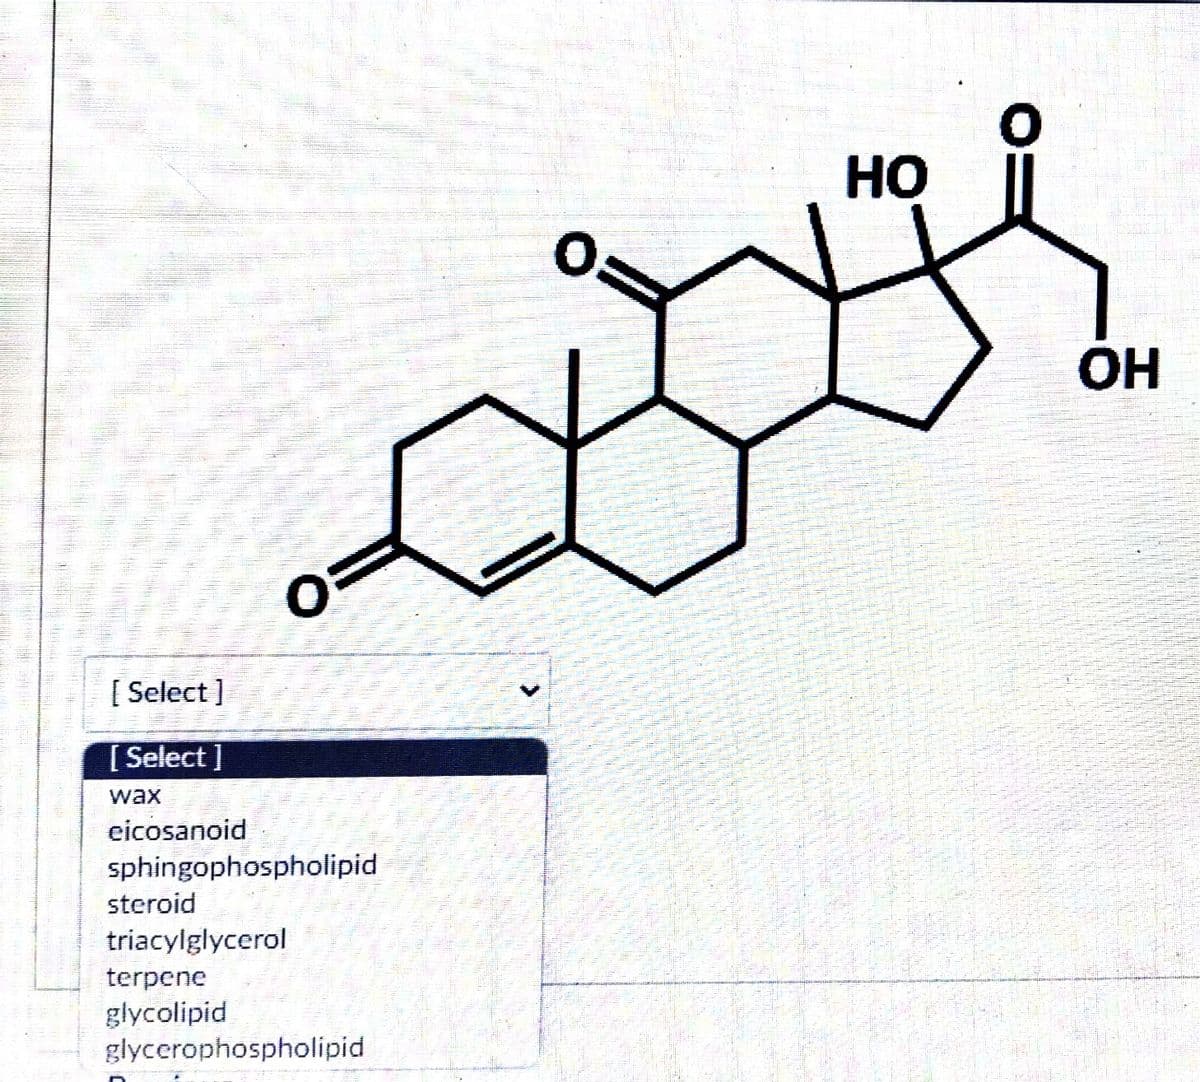 [Select]
[Select]
wax
cicosanoid
sphingophospholipid
steroid
triacylglycerol
terpene
glycolipid
glycerophospholipid
Sales
Se
Malt
HO
A
OH